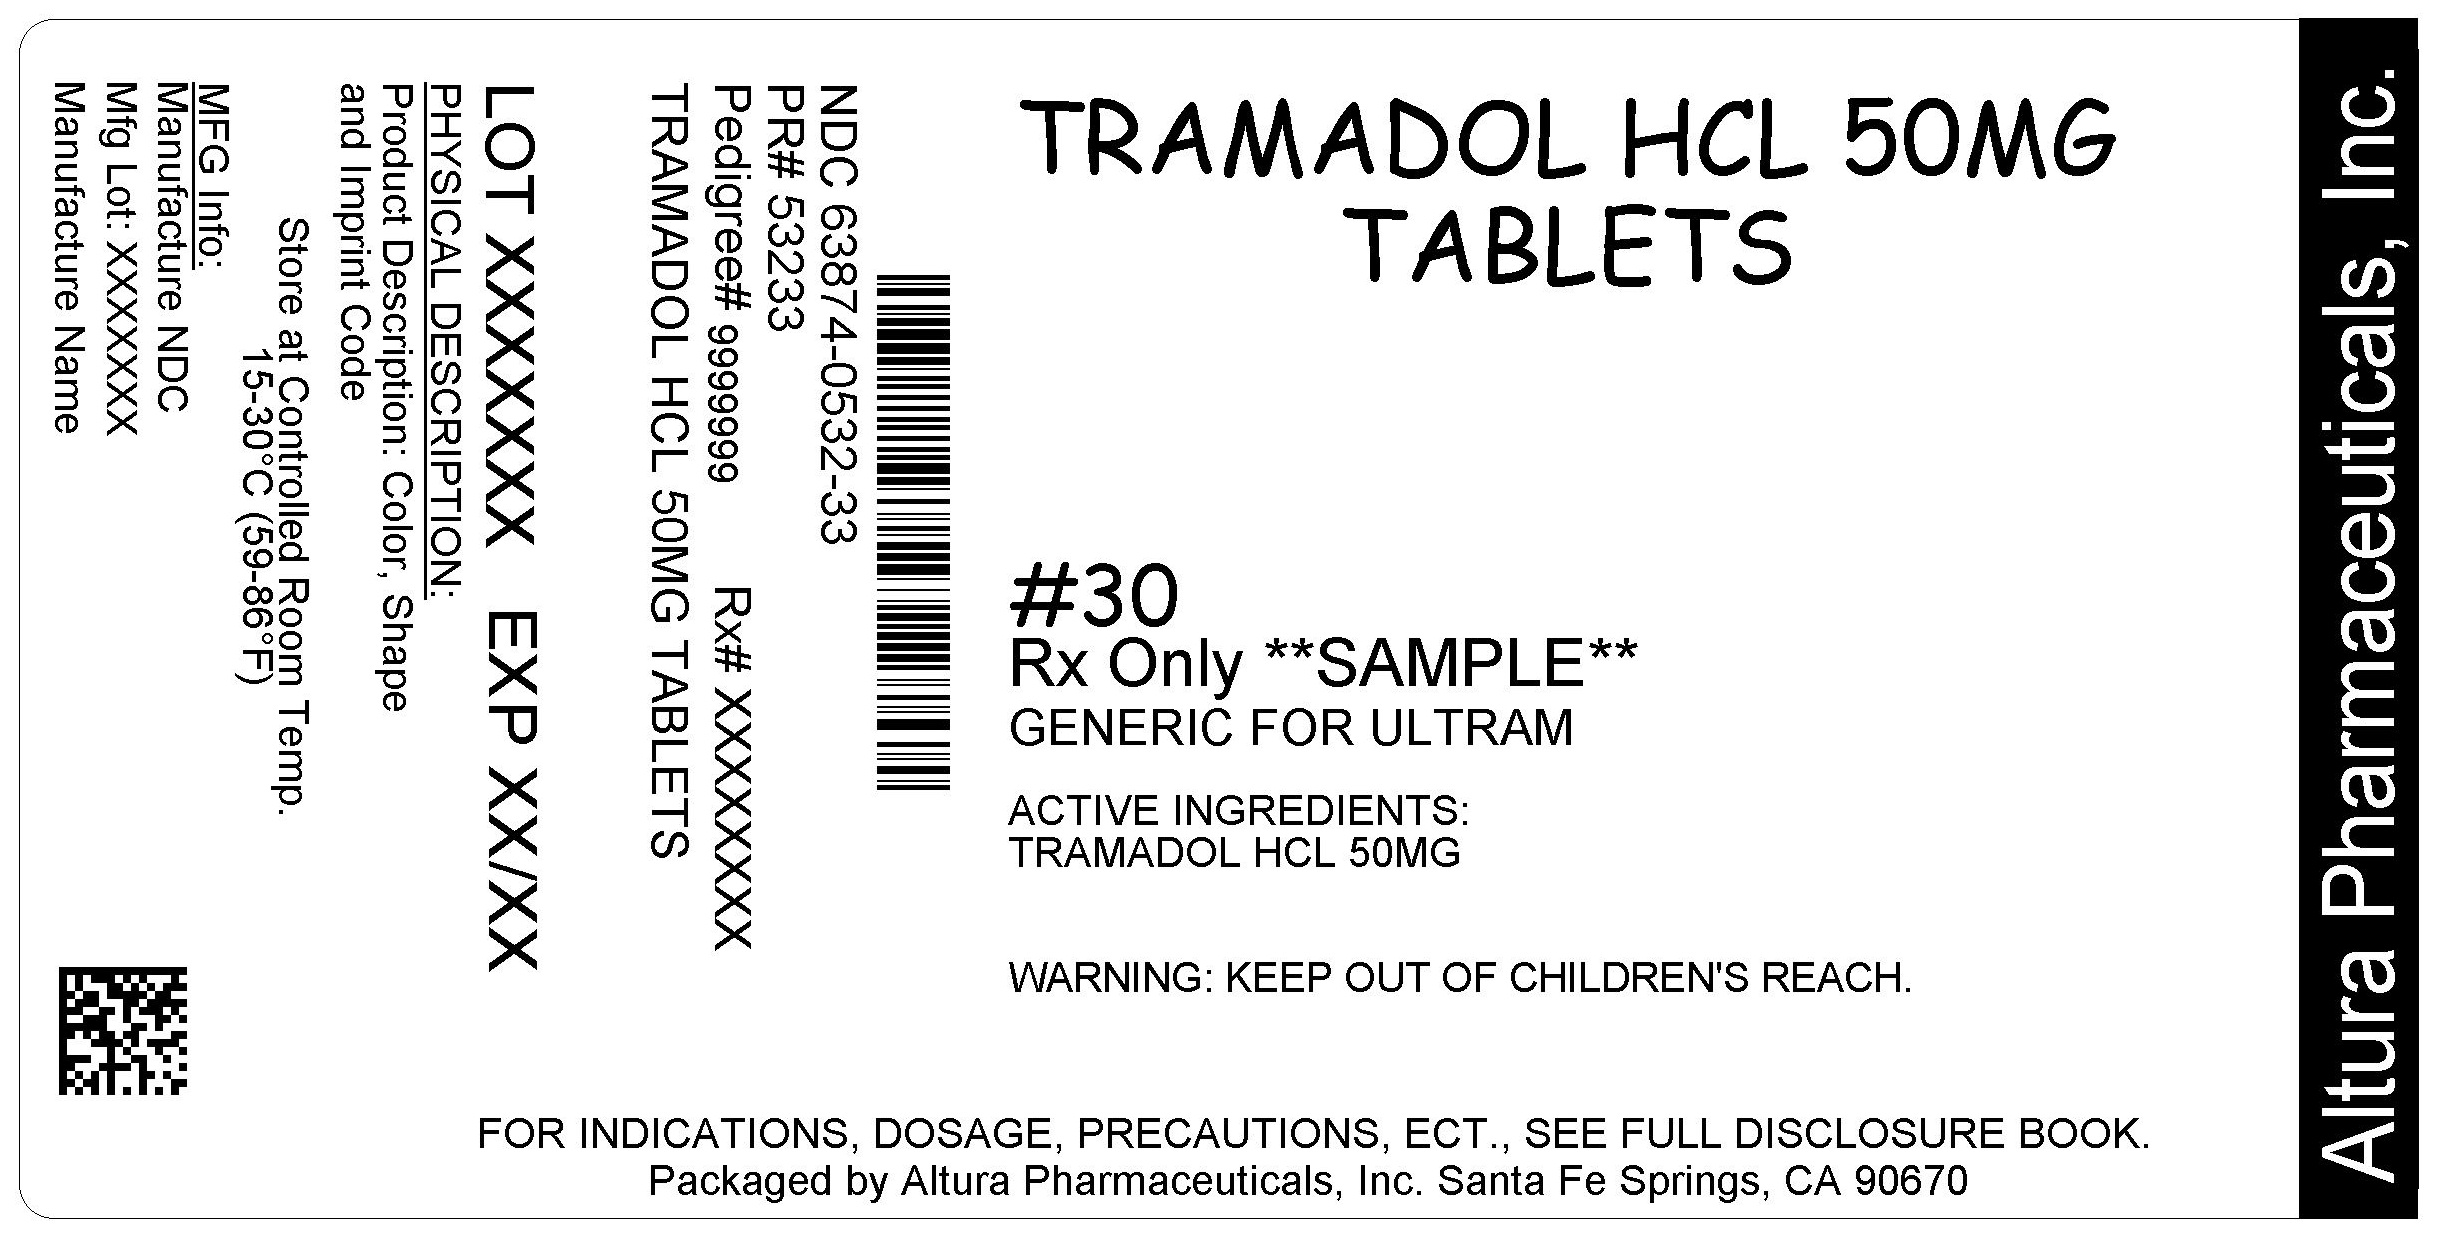 Label Image 50 mg Tablets